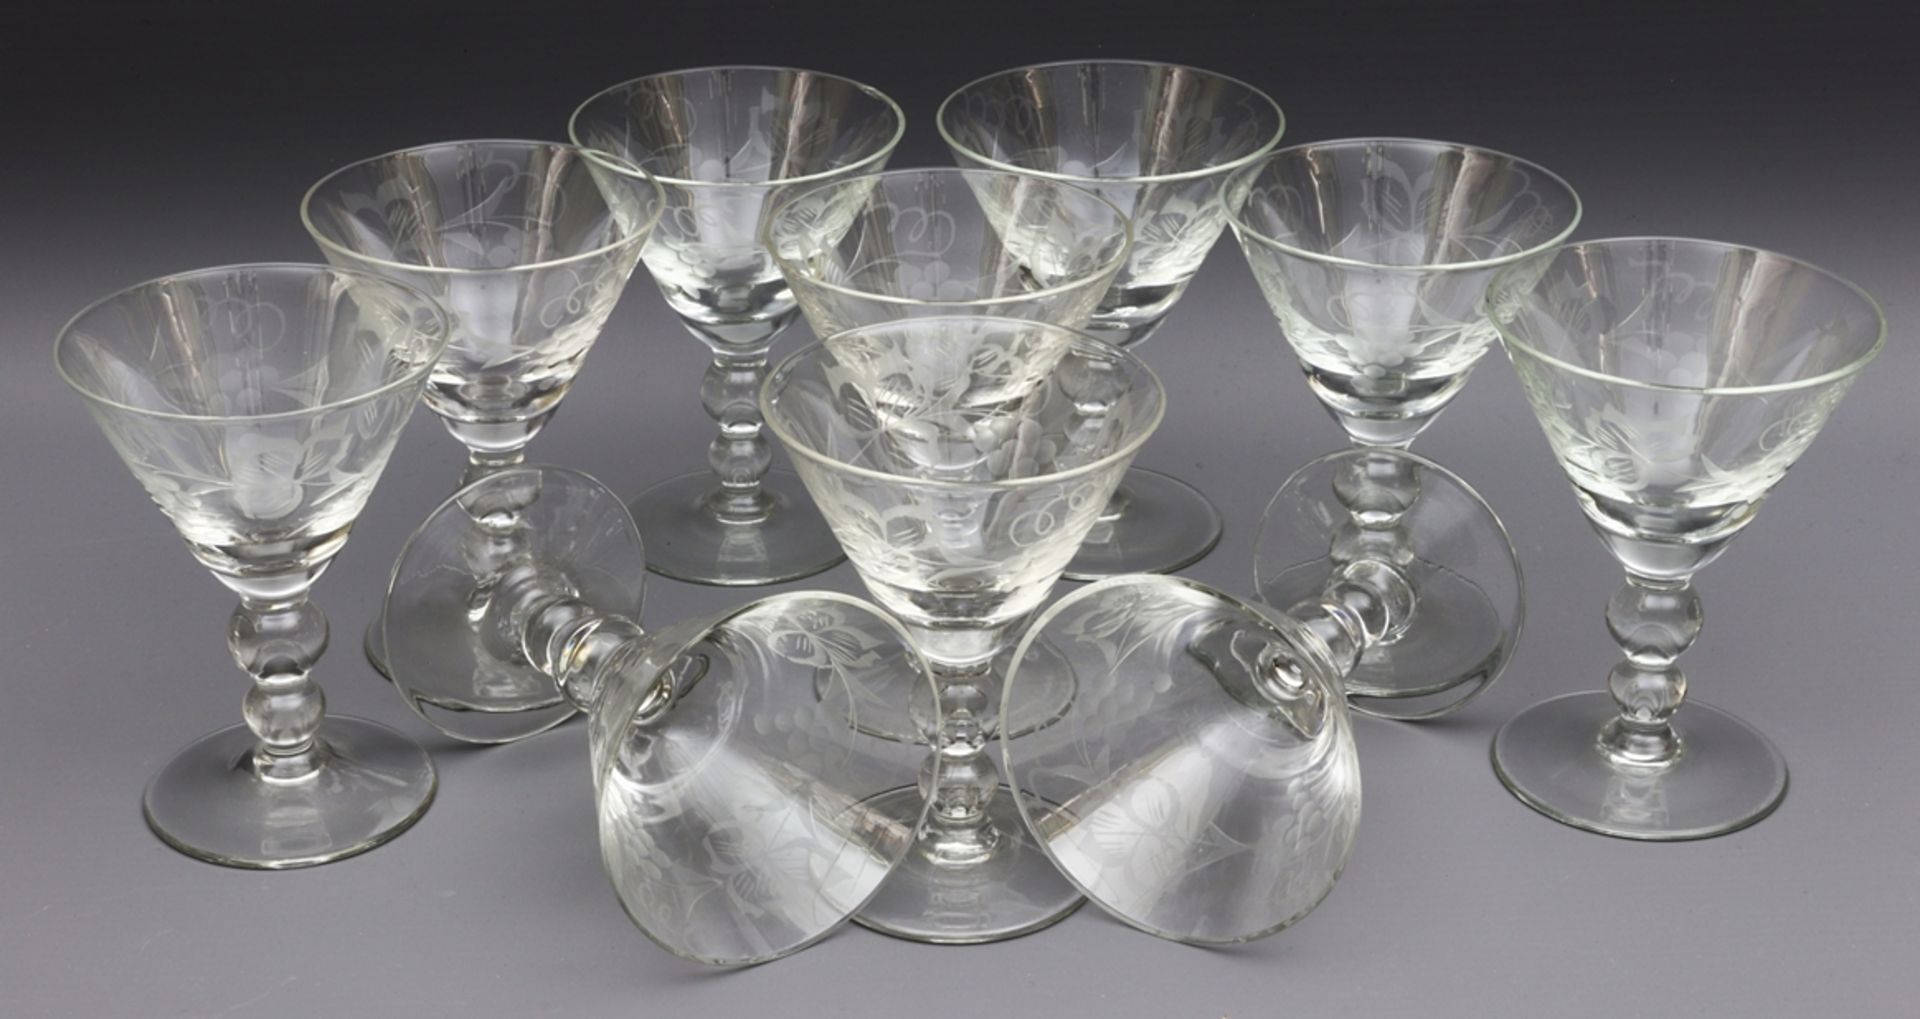 Set of 10 sweet wine glasses, Historism before 1900, German - Image 2 of 3